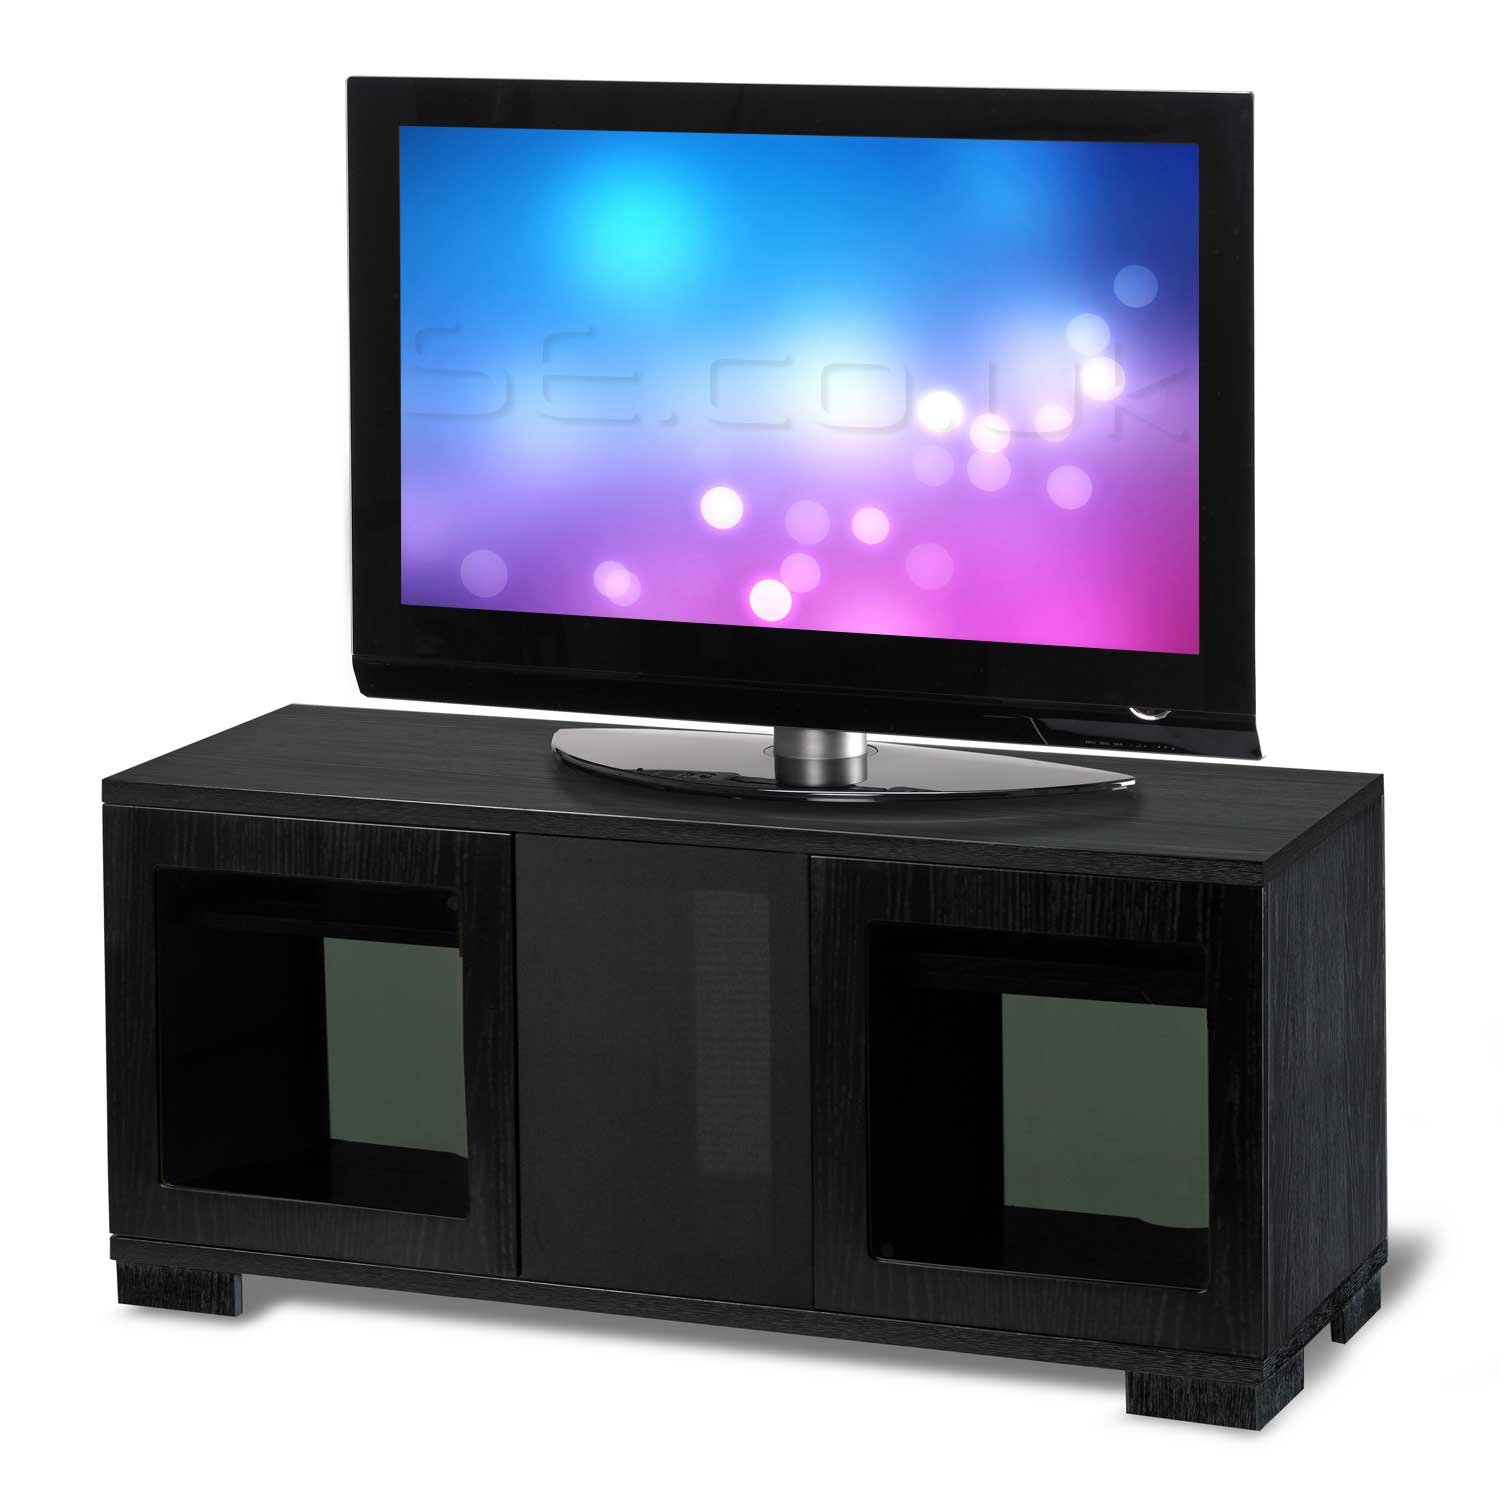 Blok Classix 3000 Black Oak and Glass TV Stand